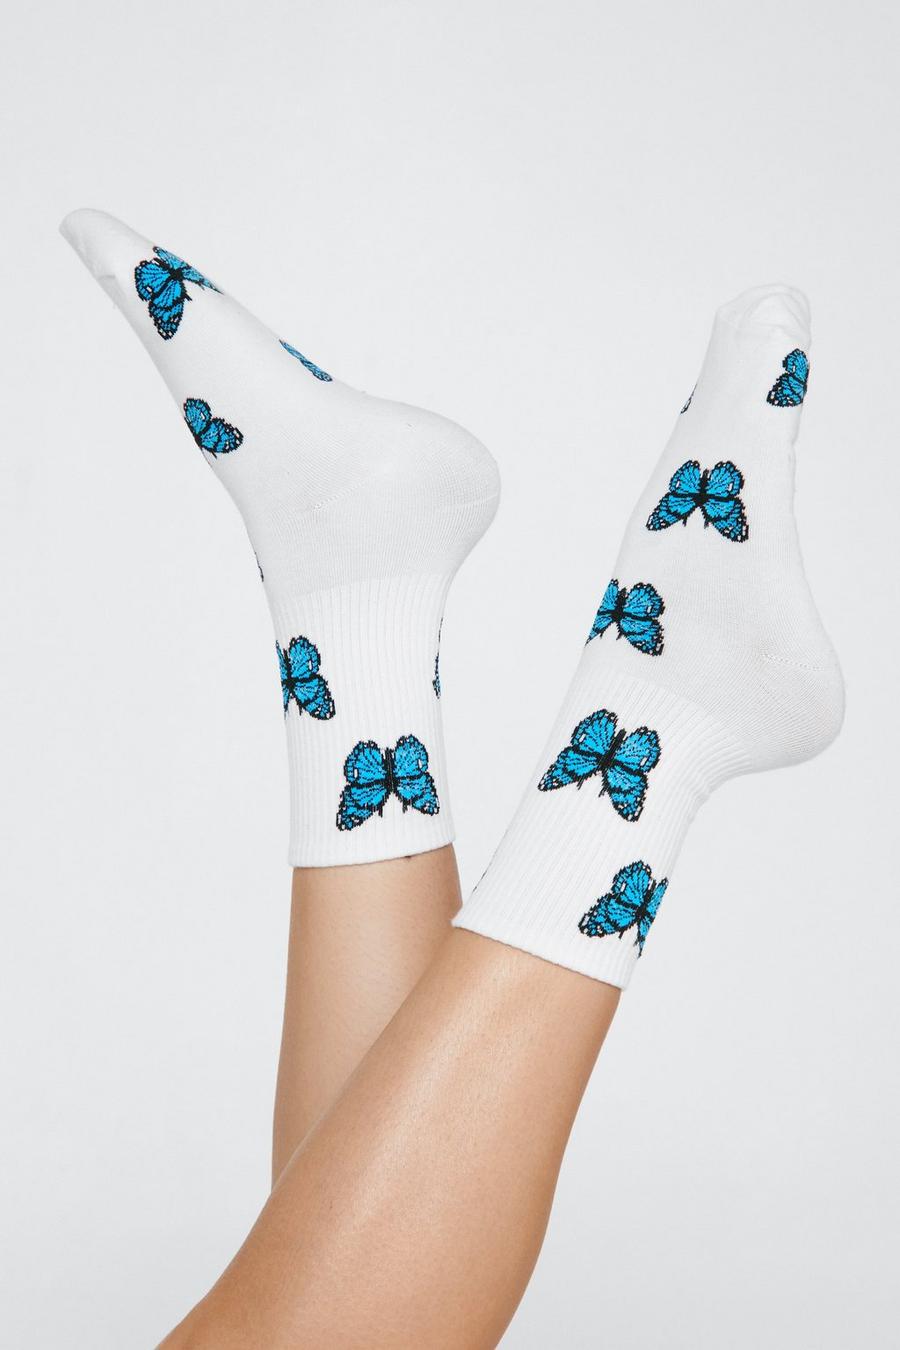 Butterfly Print Ankle Socks